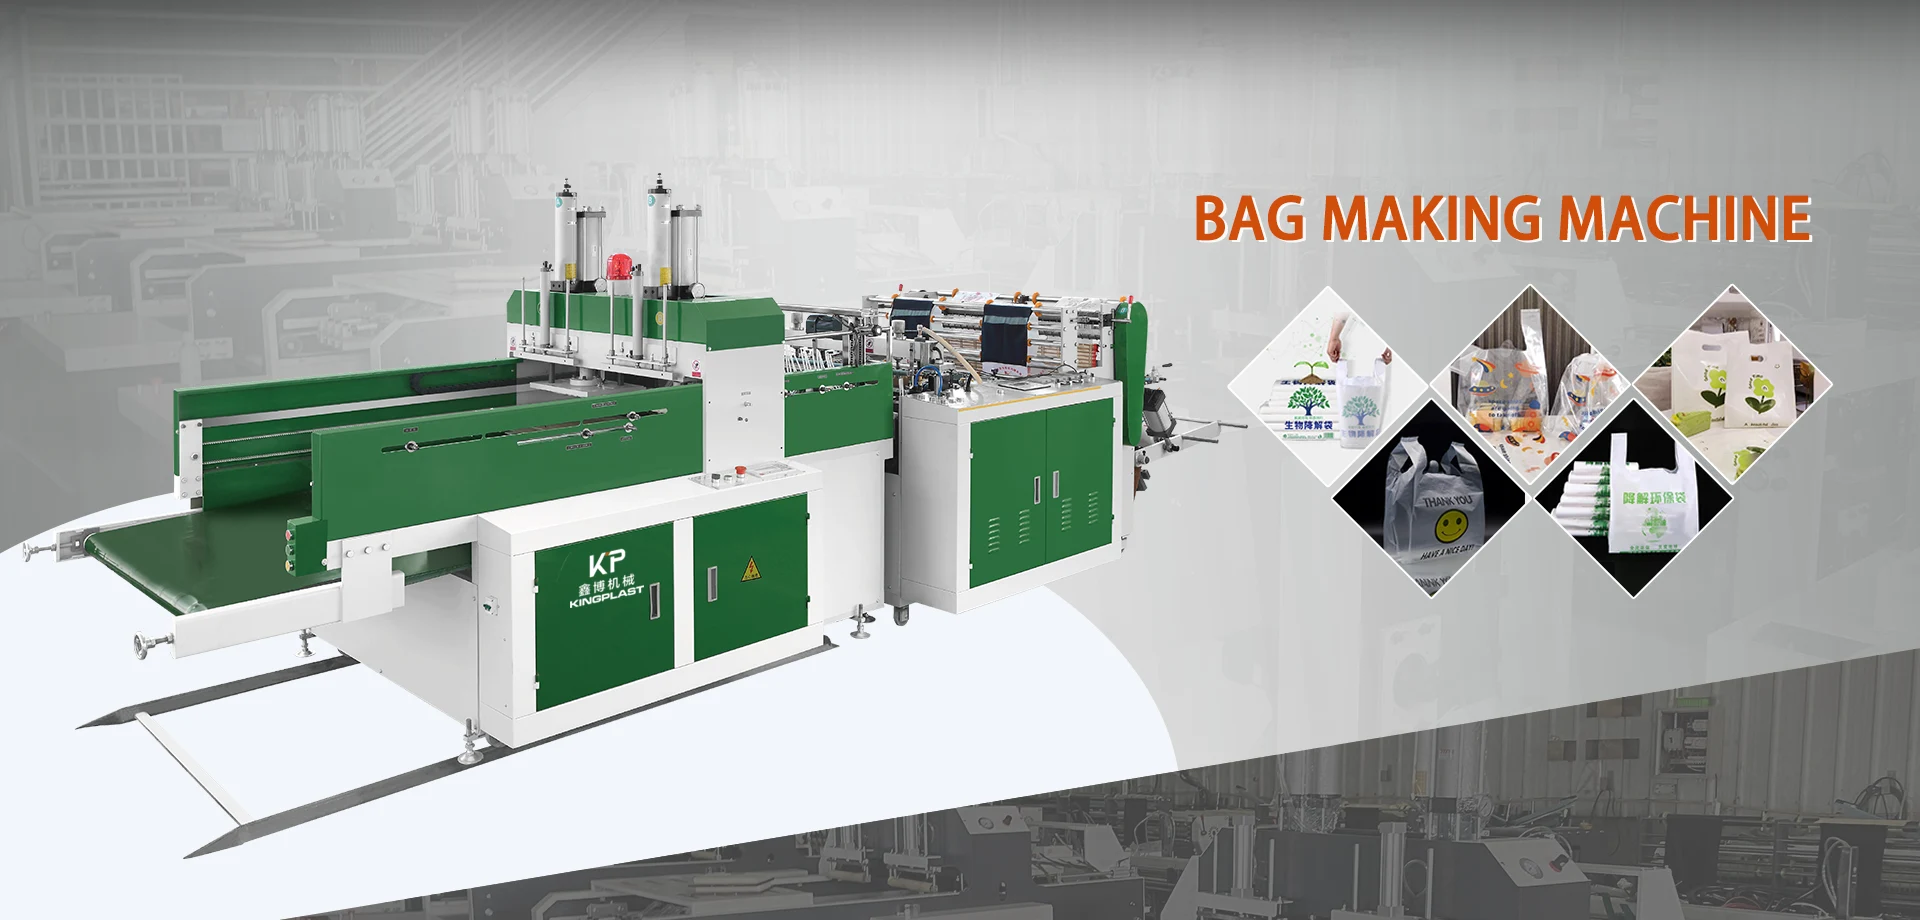 China Bag Making Machine Suppliers